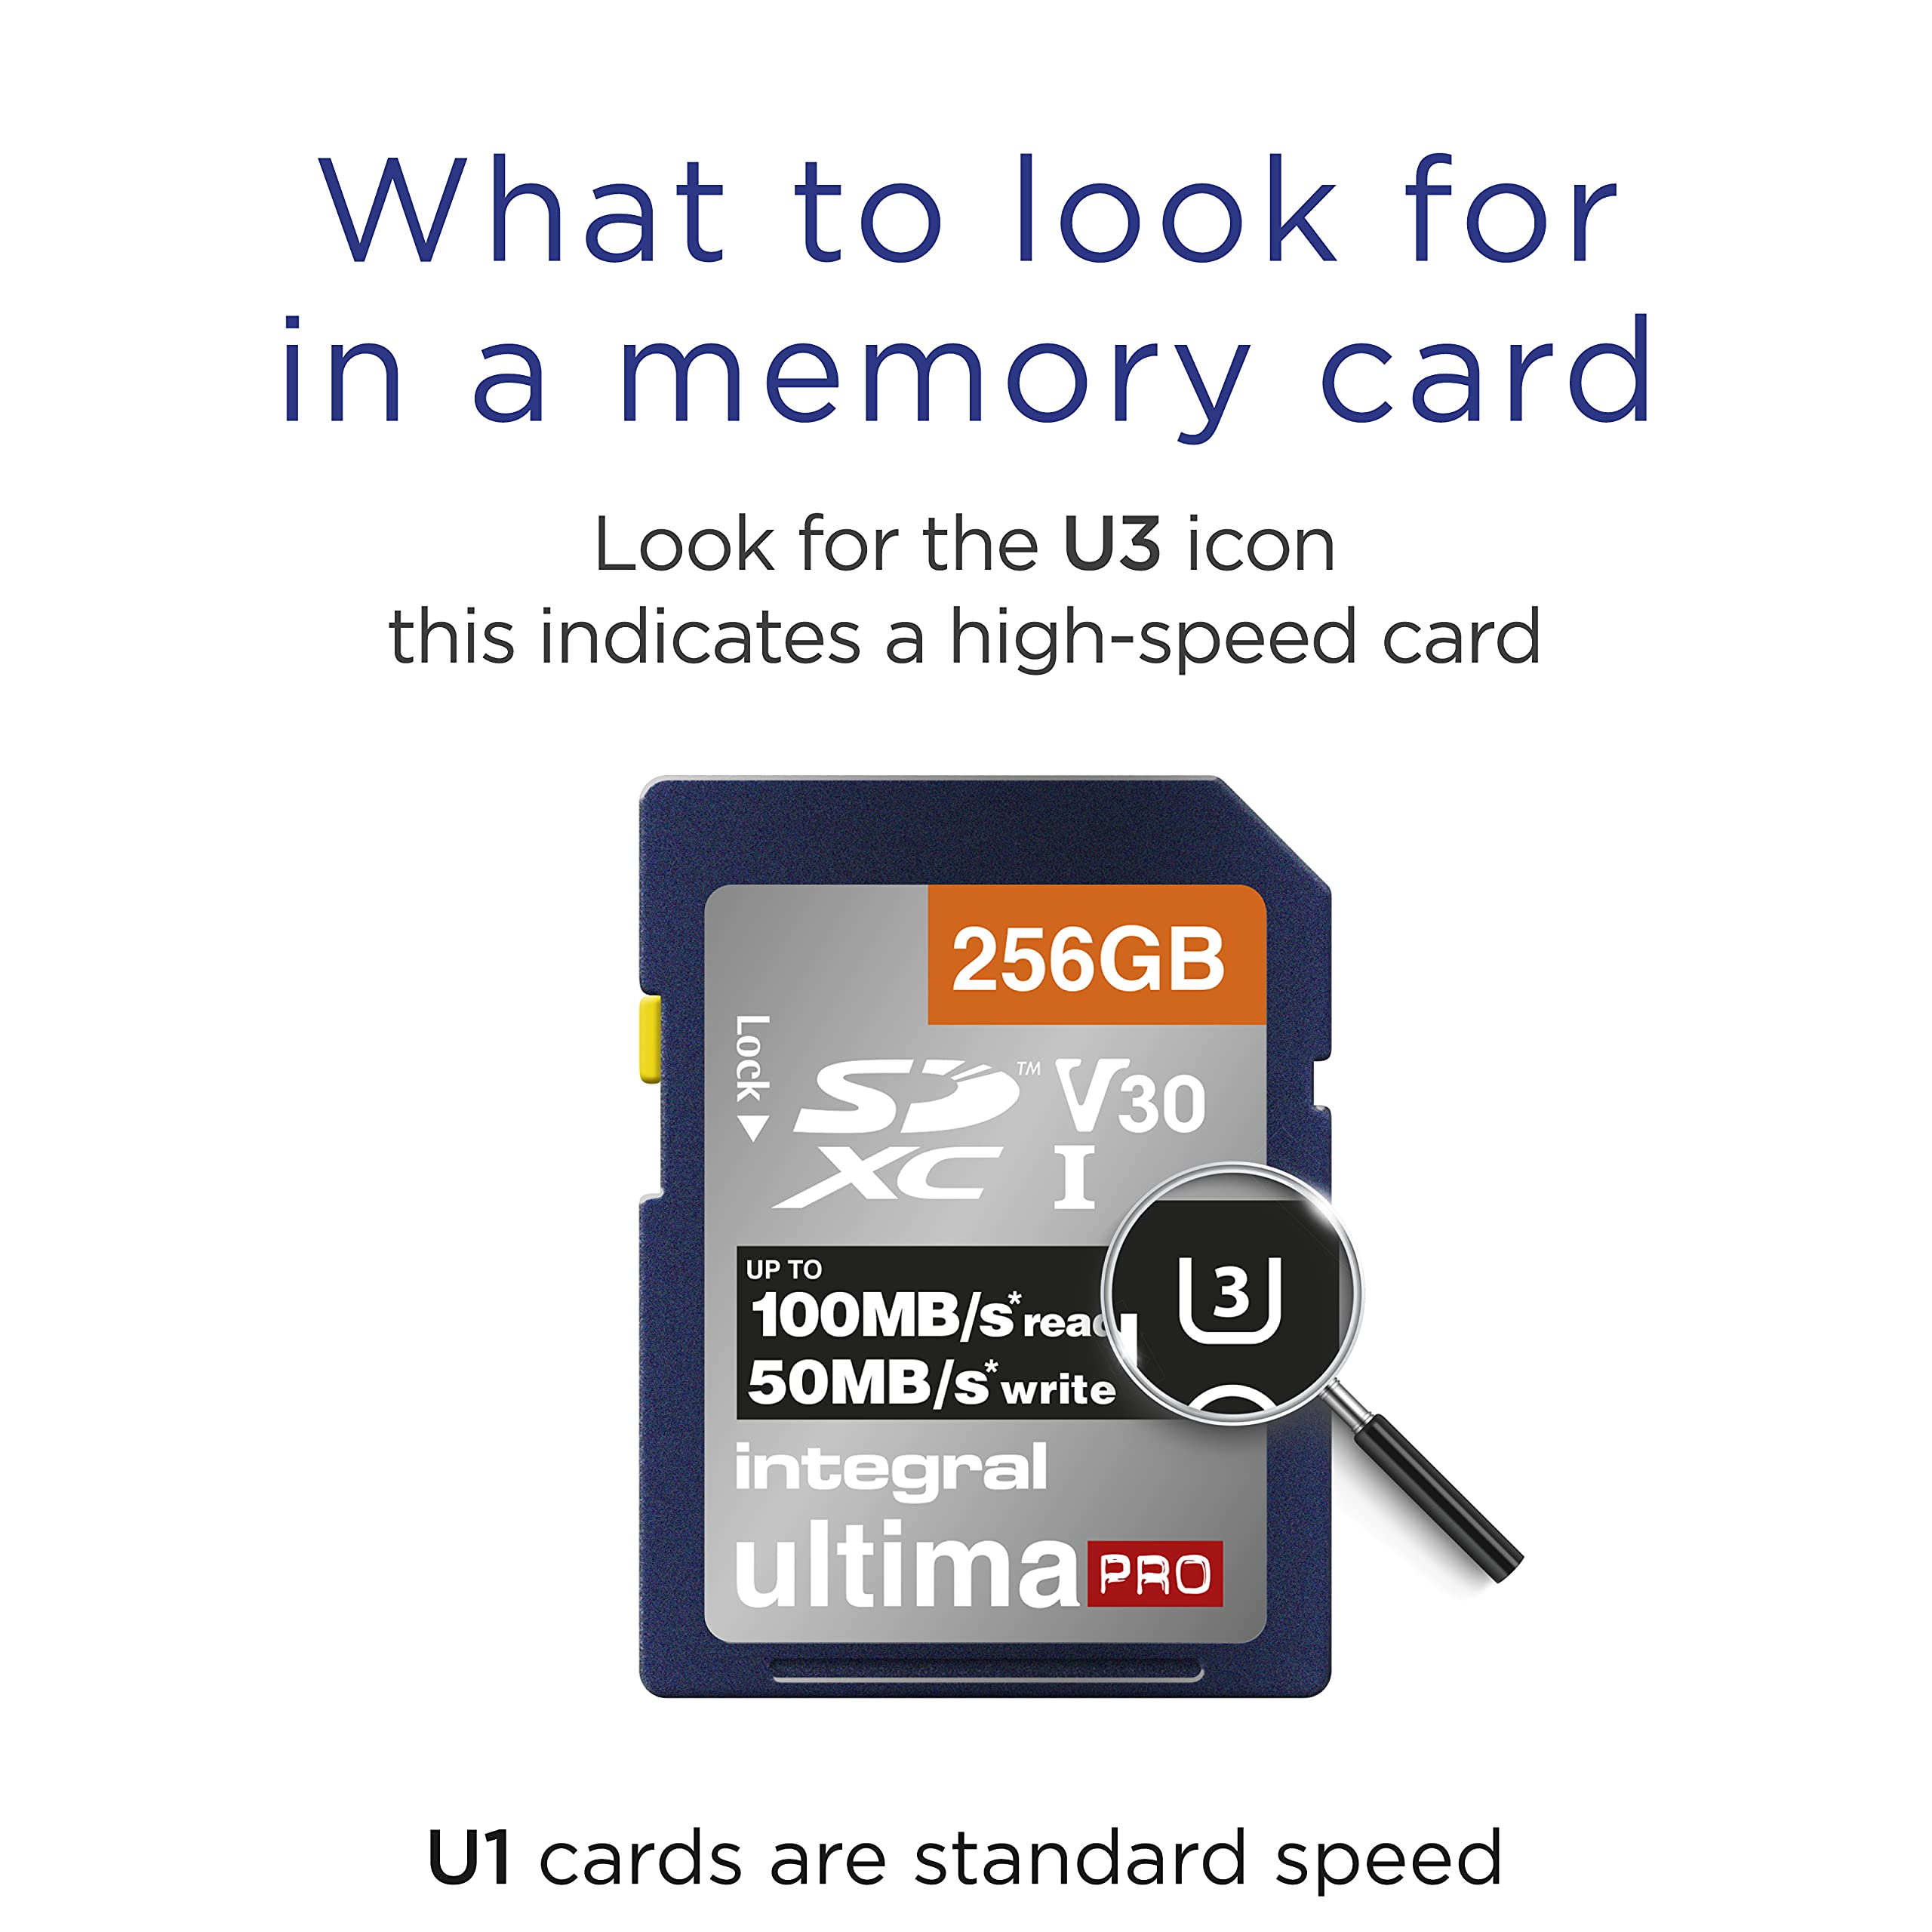 Integral 256GB SD Card 4K Ultra-HD Video Premium High Speed Memory Card SDXC Up to 100MB/s SDXC V30 UHS-I U3 Class 10 SD Memory Card